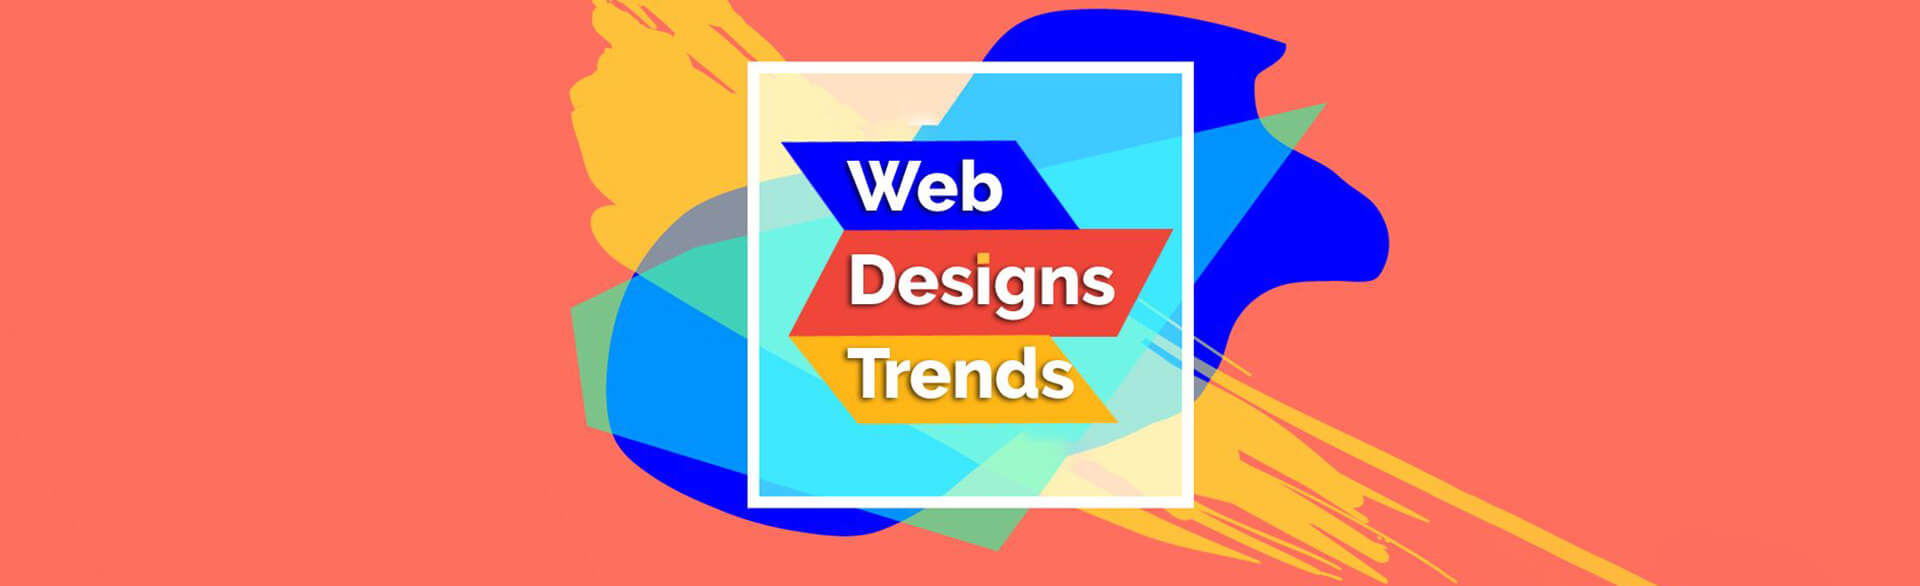 WEB DESIGN TRENDS FOR 2019